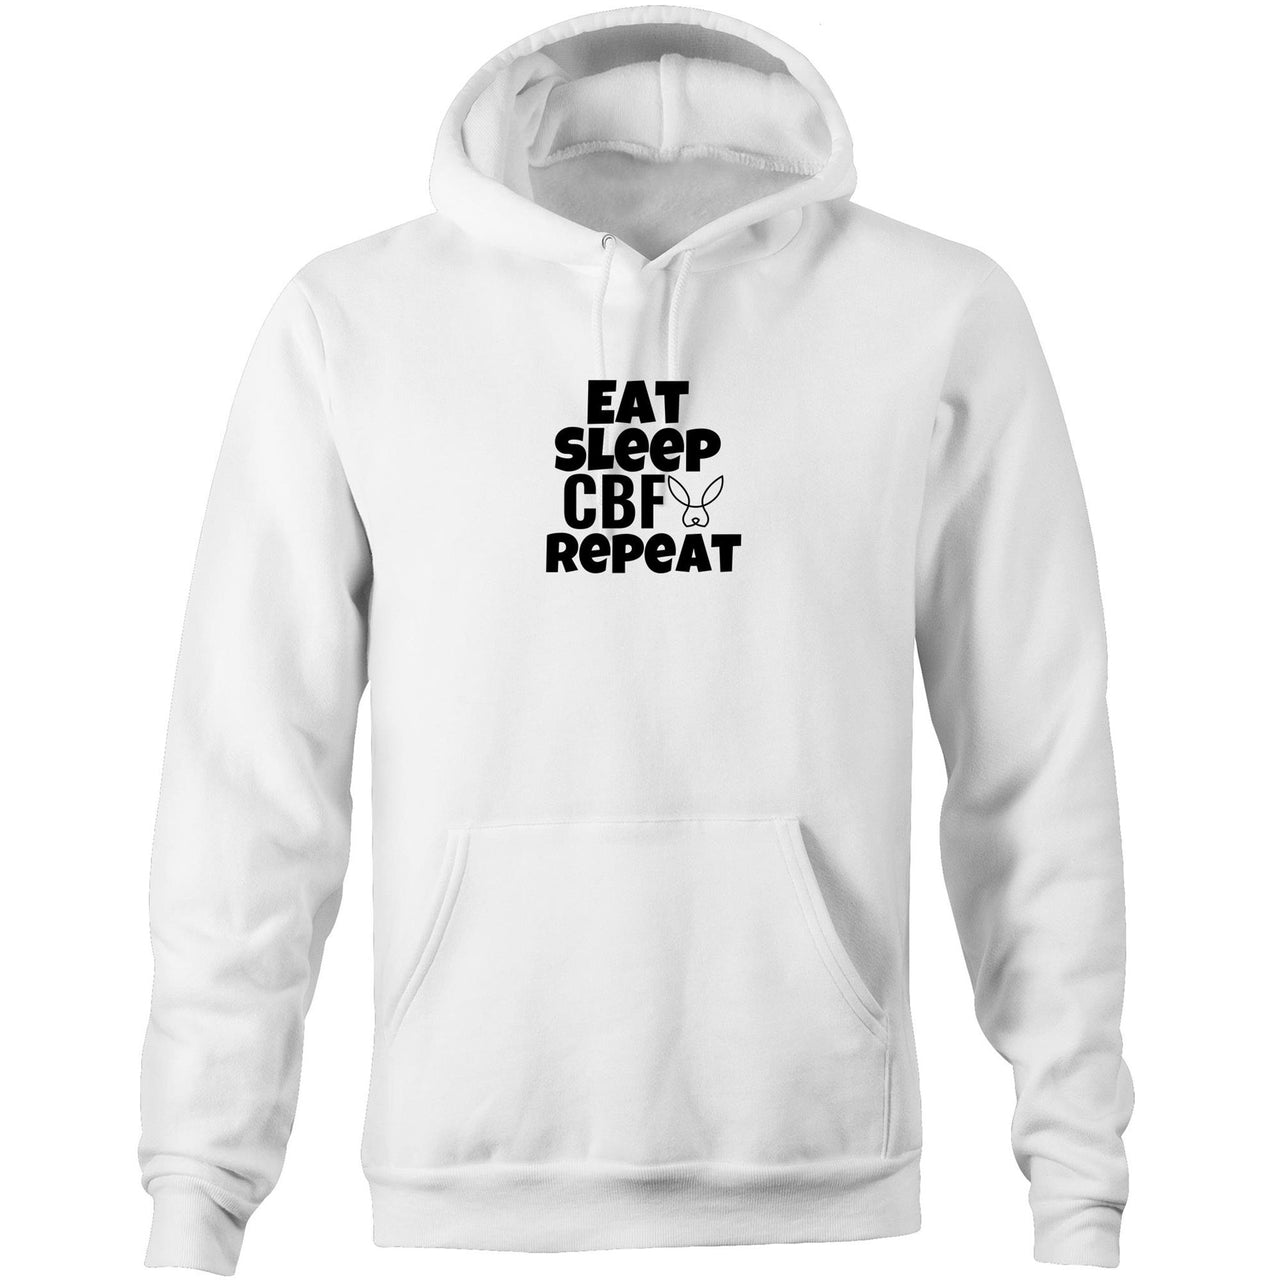 Eat Sleep CBF Repeat Pocket Hoodie Sweatshirt White by CBF Clothing